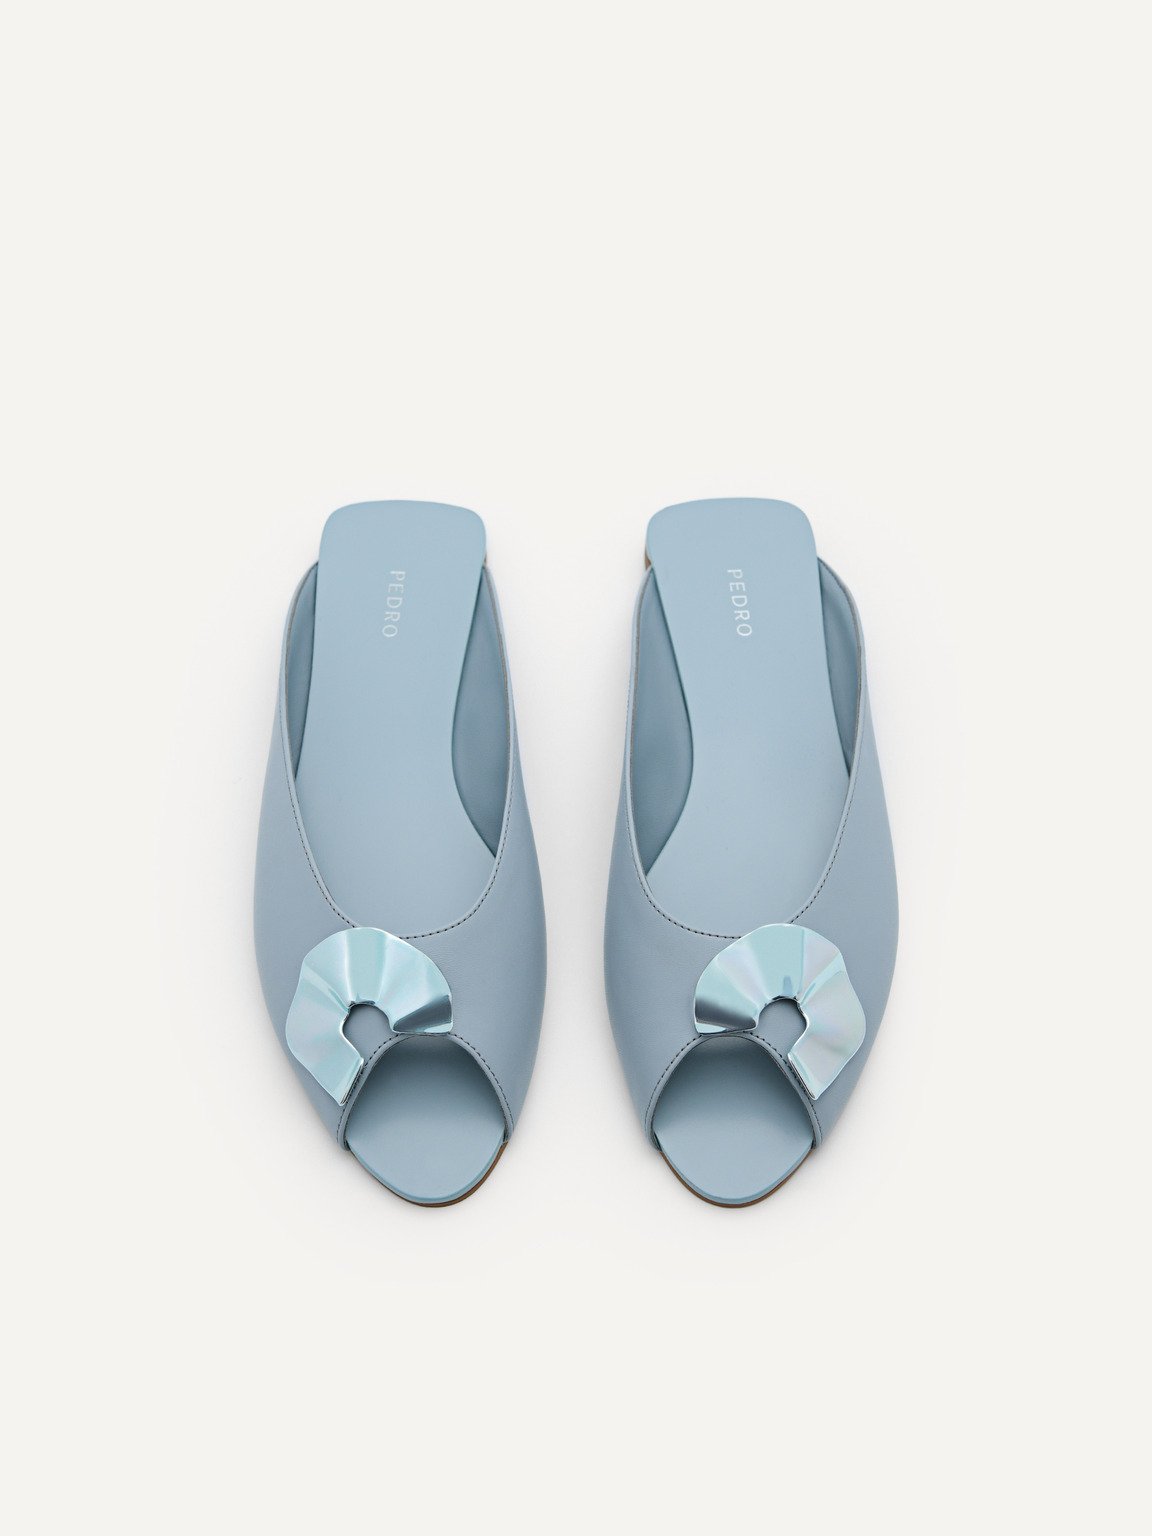 Iris Flat Sandals, Slate Blue